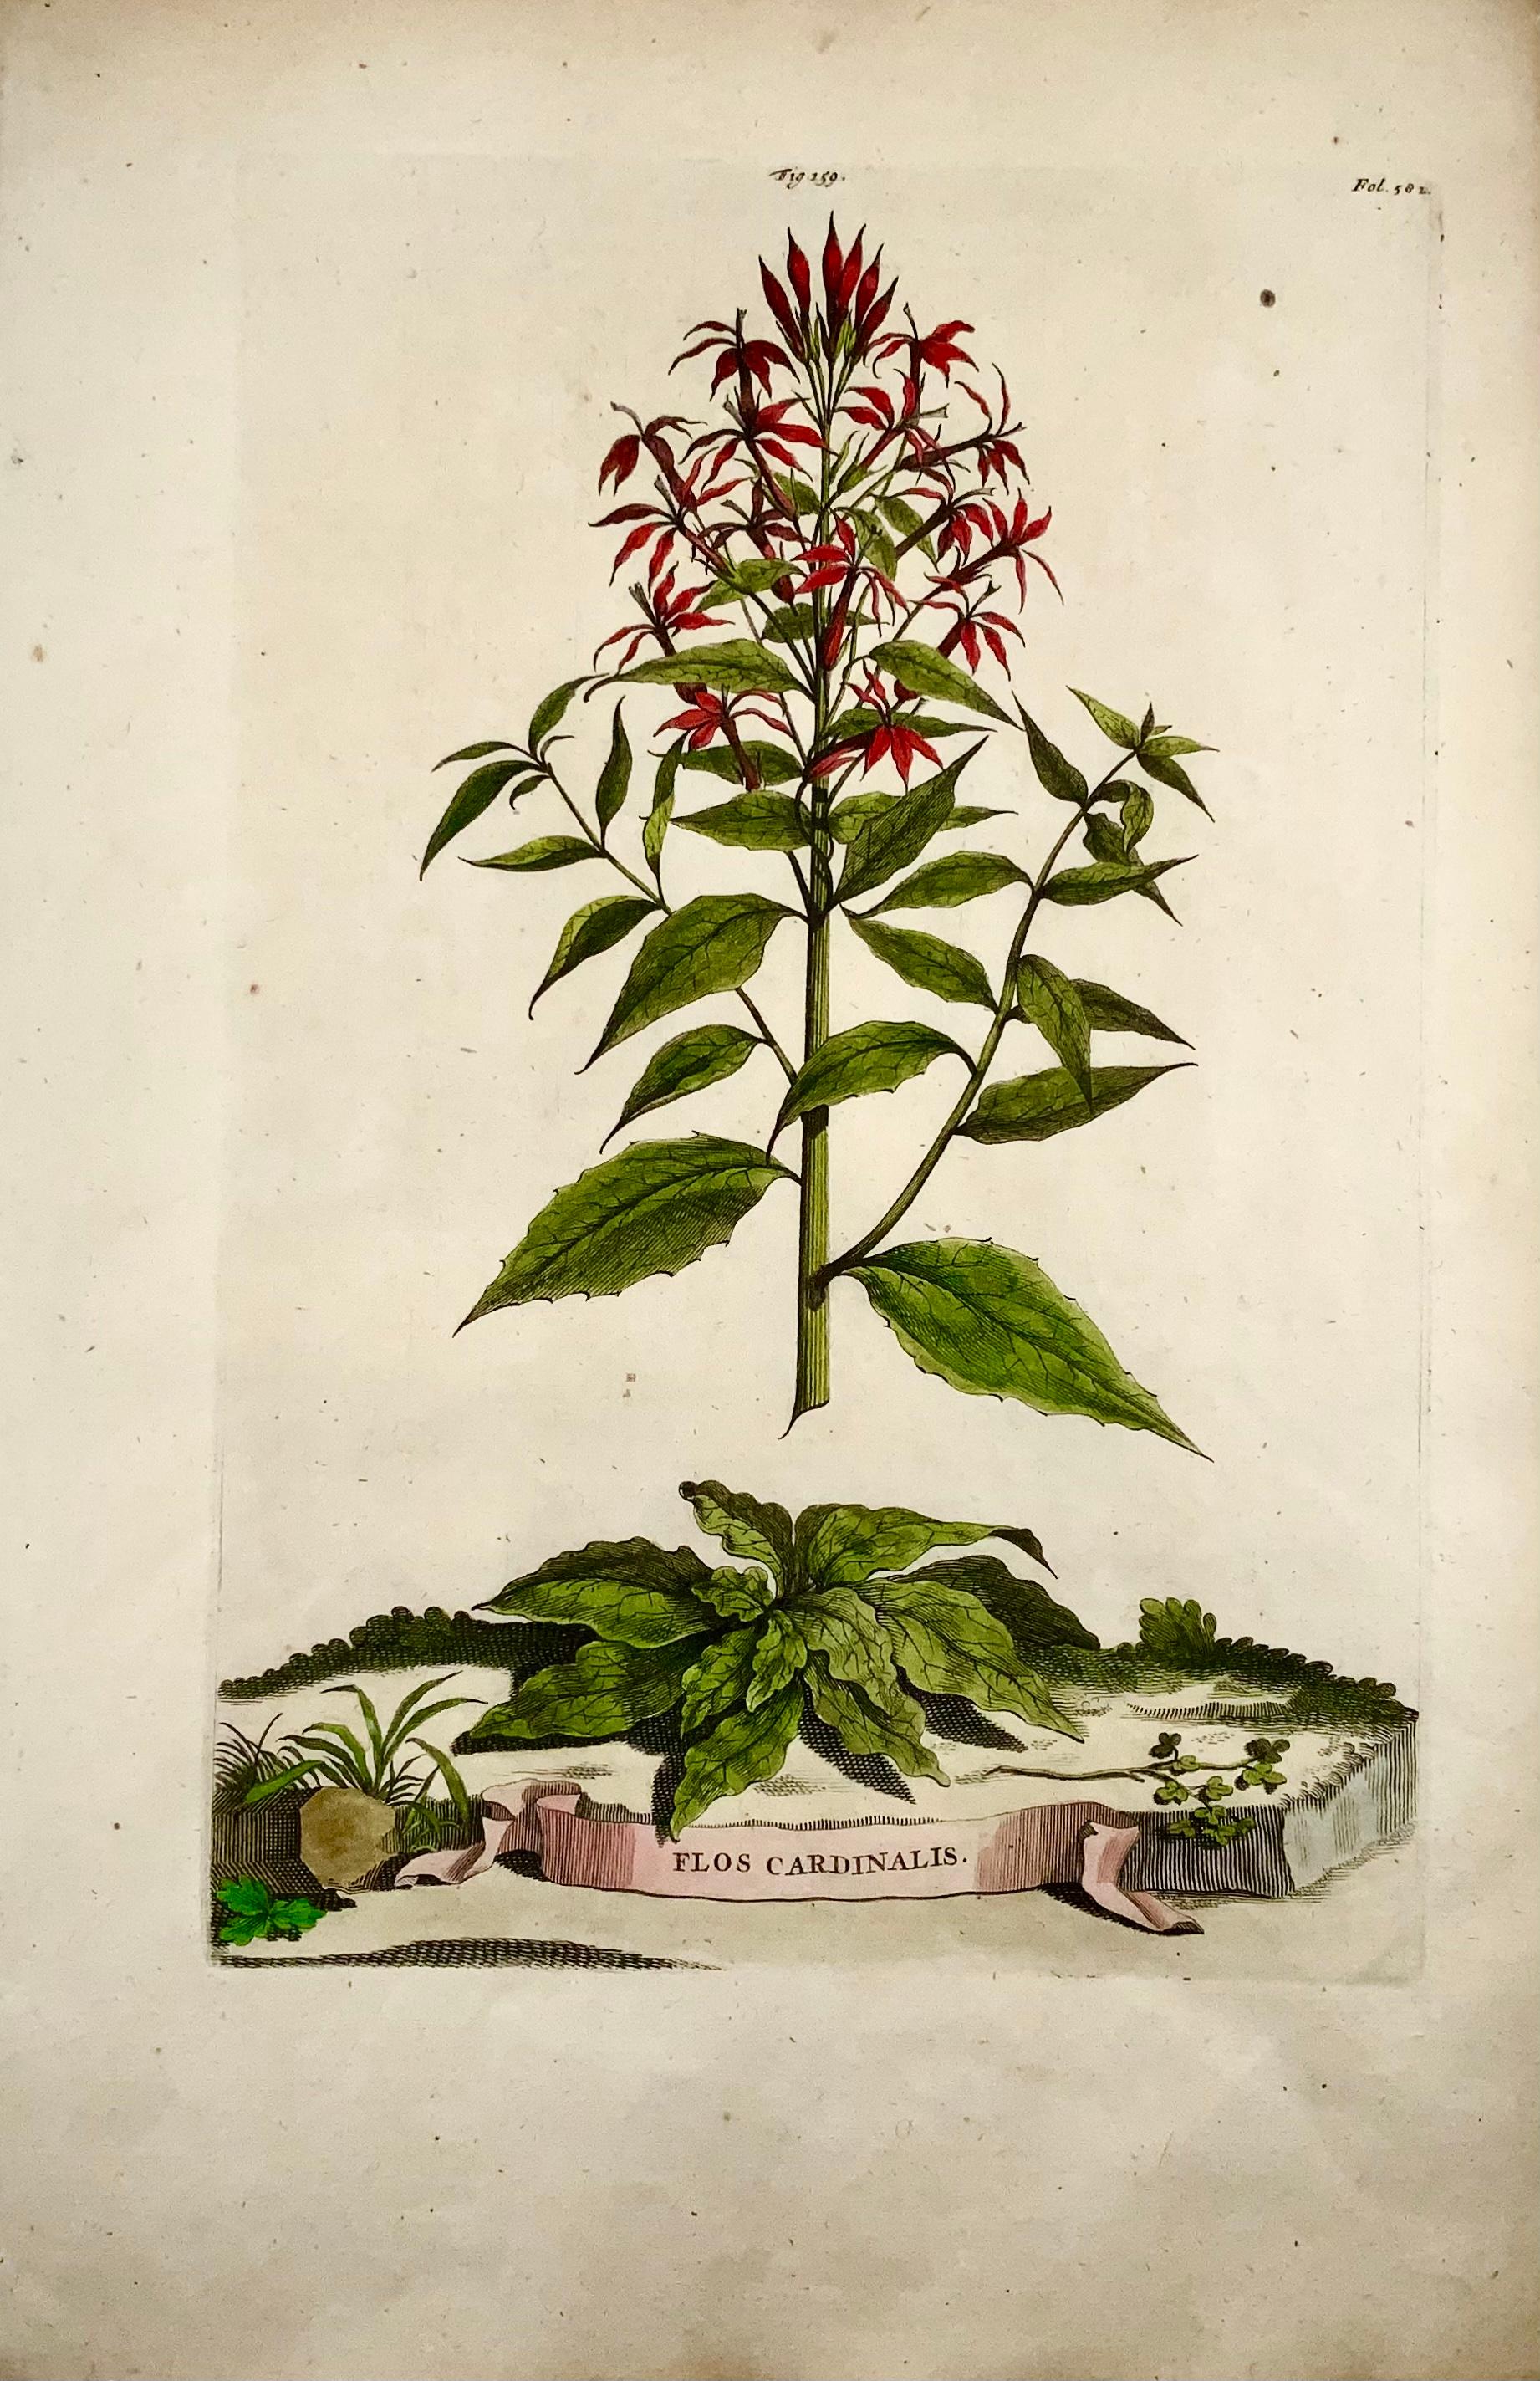 This highly decorative, folio botanical engraving from Abraham Munting's 